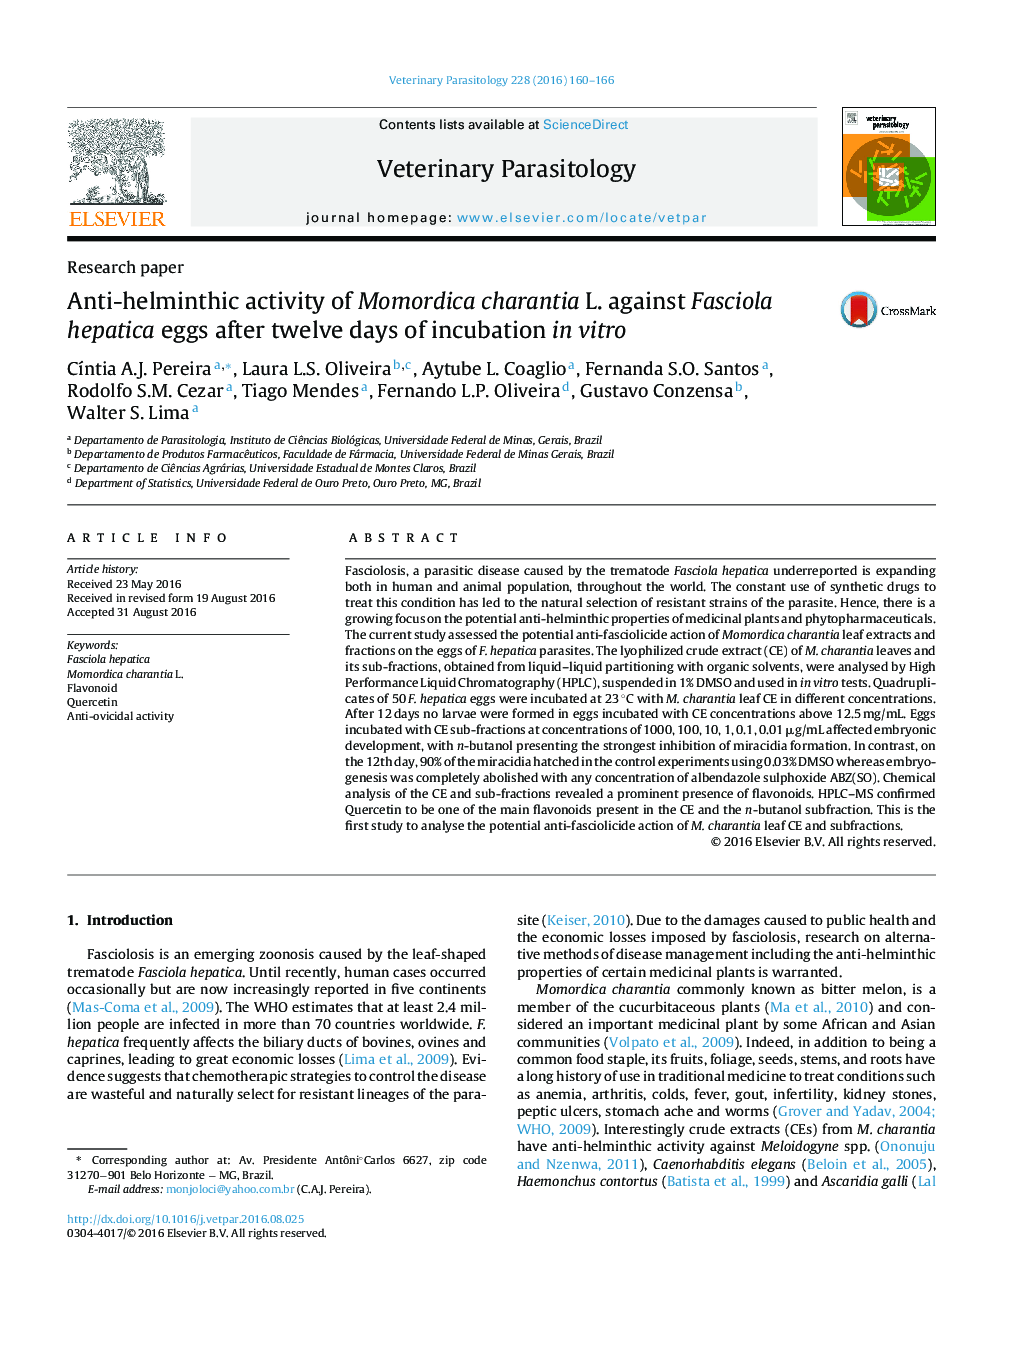 Anti-helminthic activity of Momordica charantia L. against Fasciola hepatica eggs after twelve days of incubation in vitro